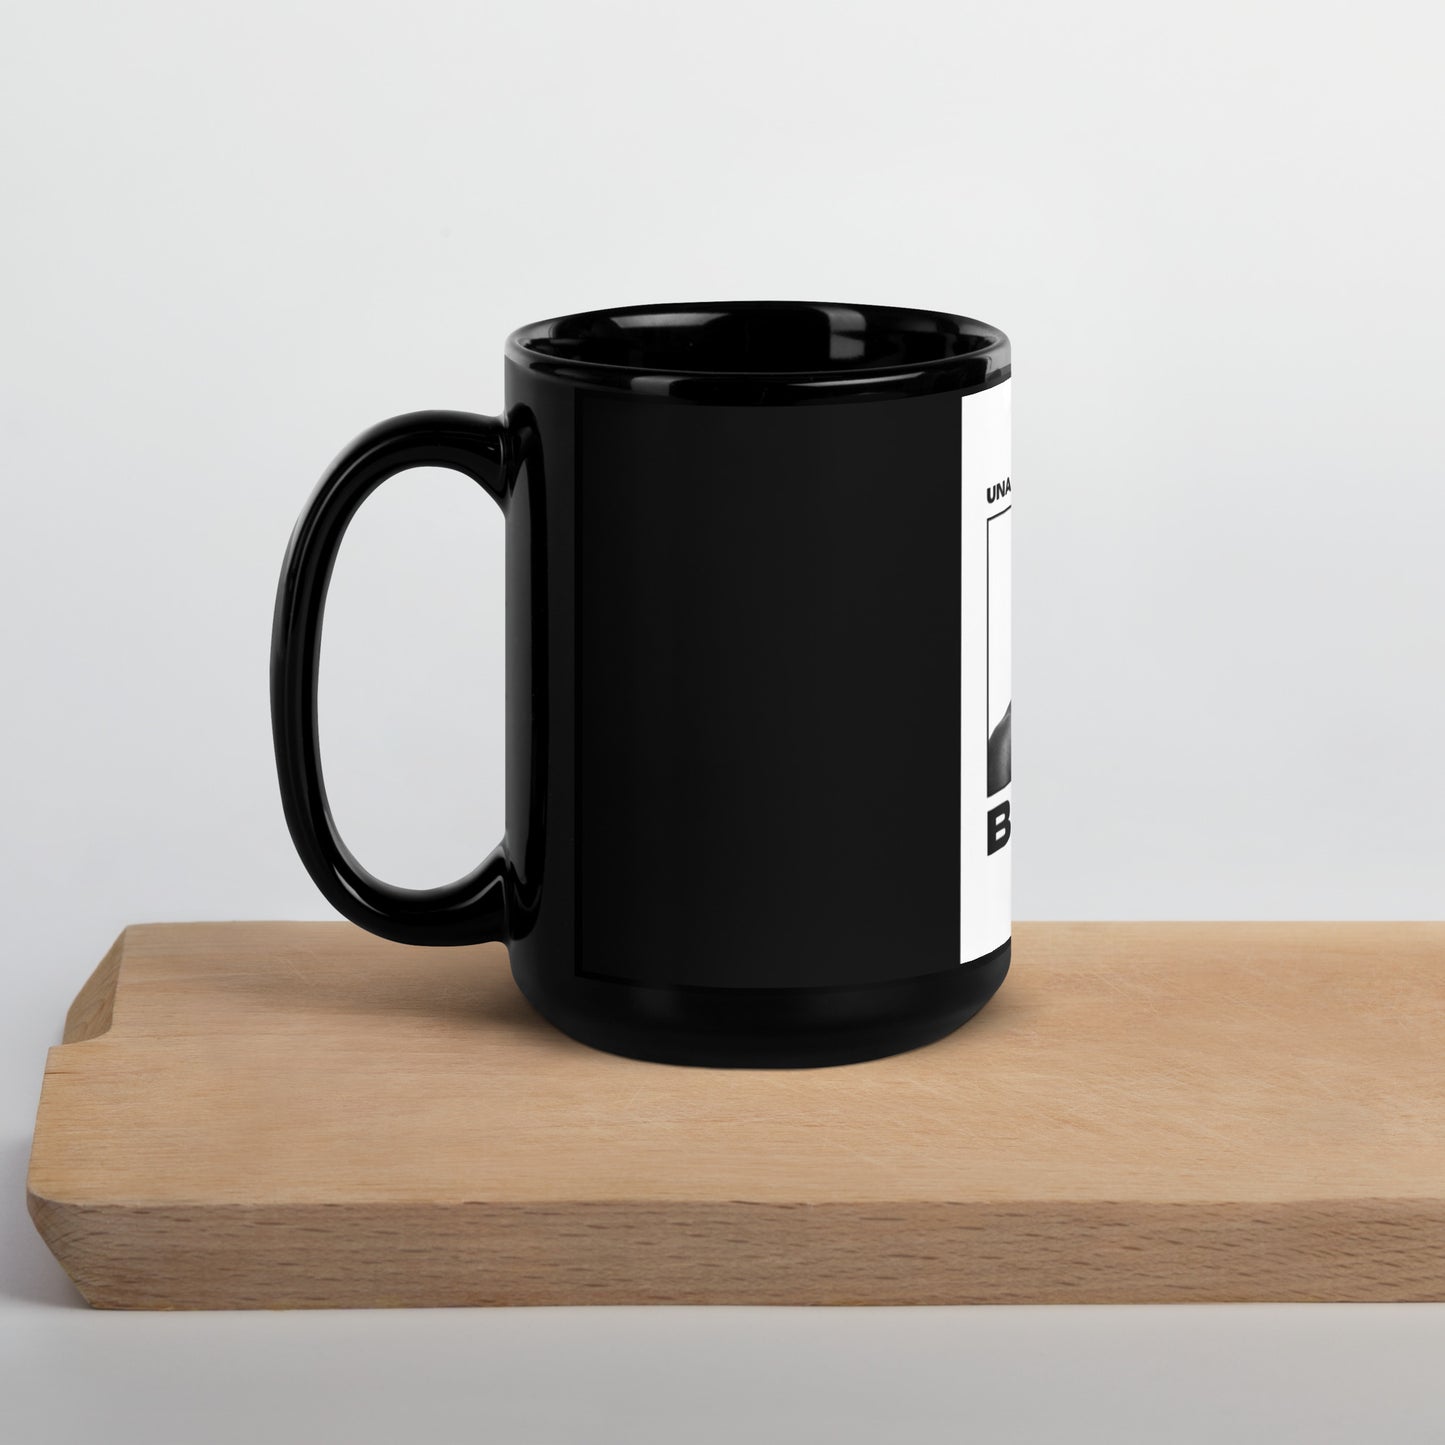 UNAPOLOGETICALLY BLACK Glossy Mug